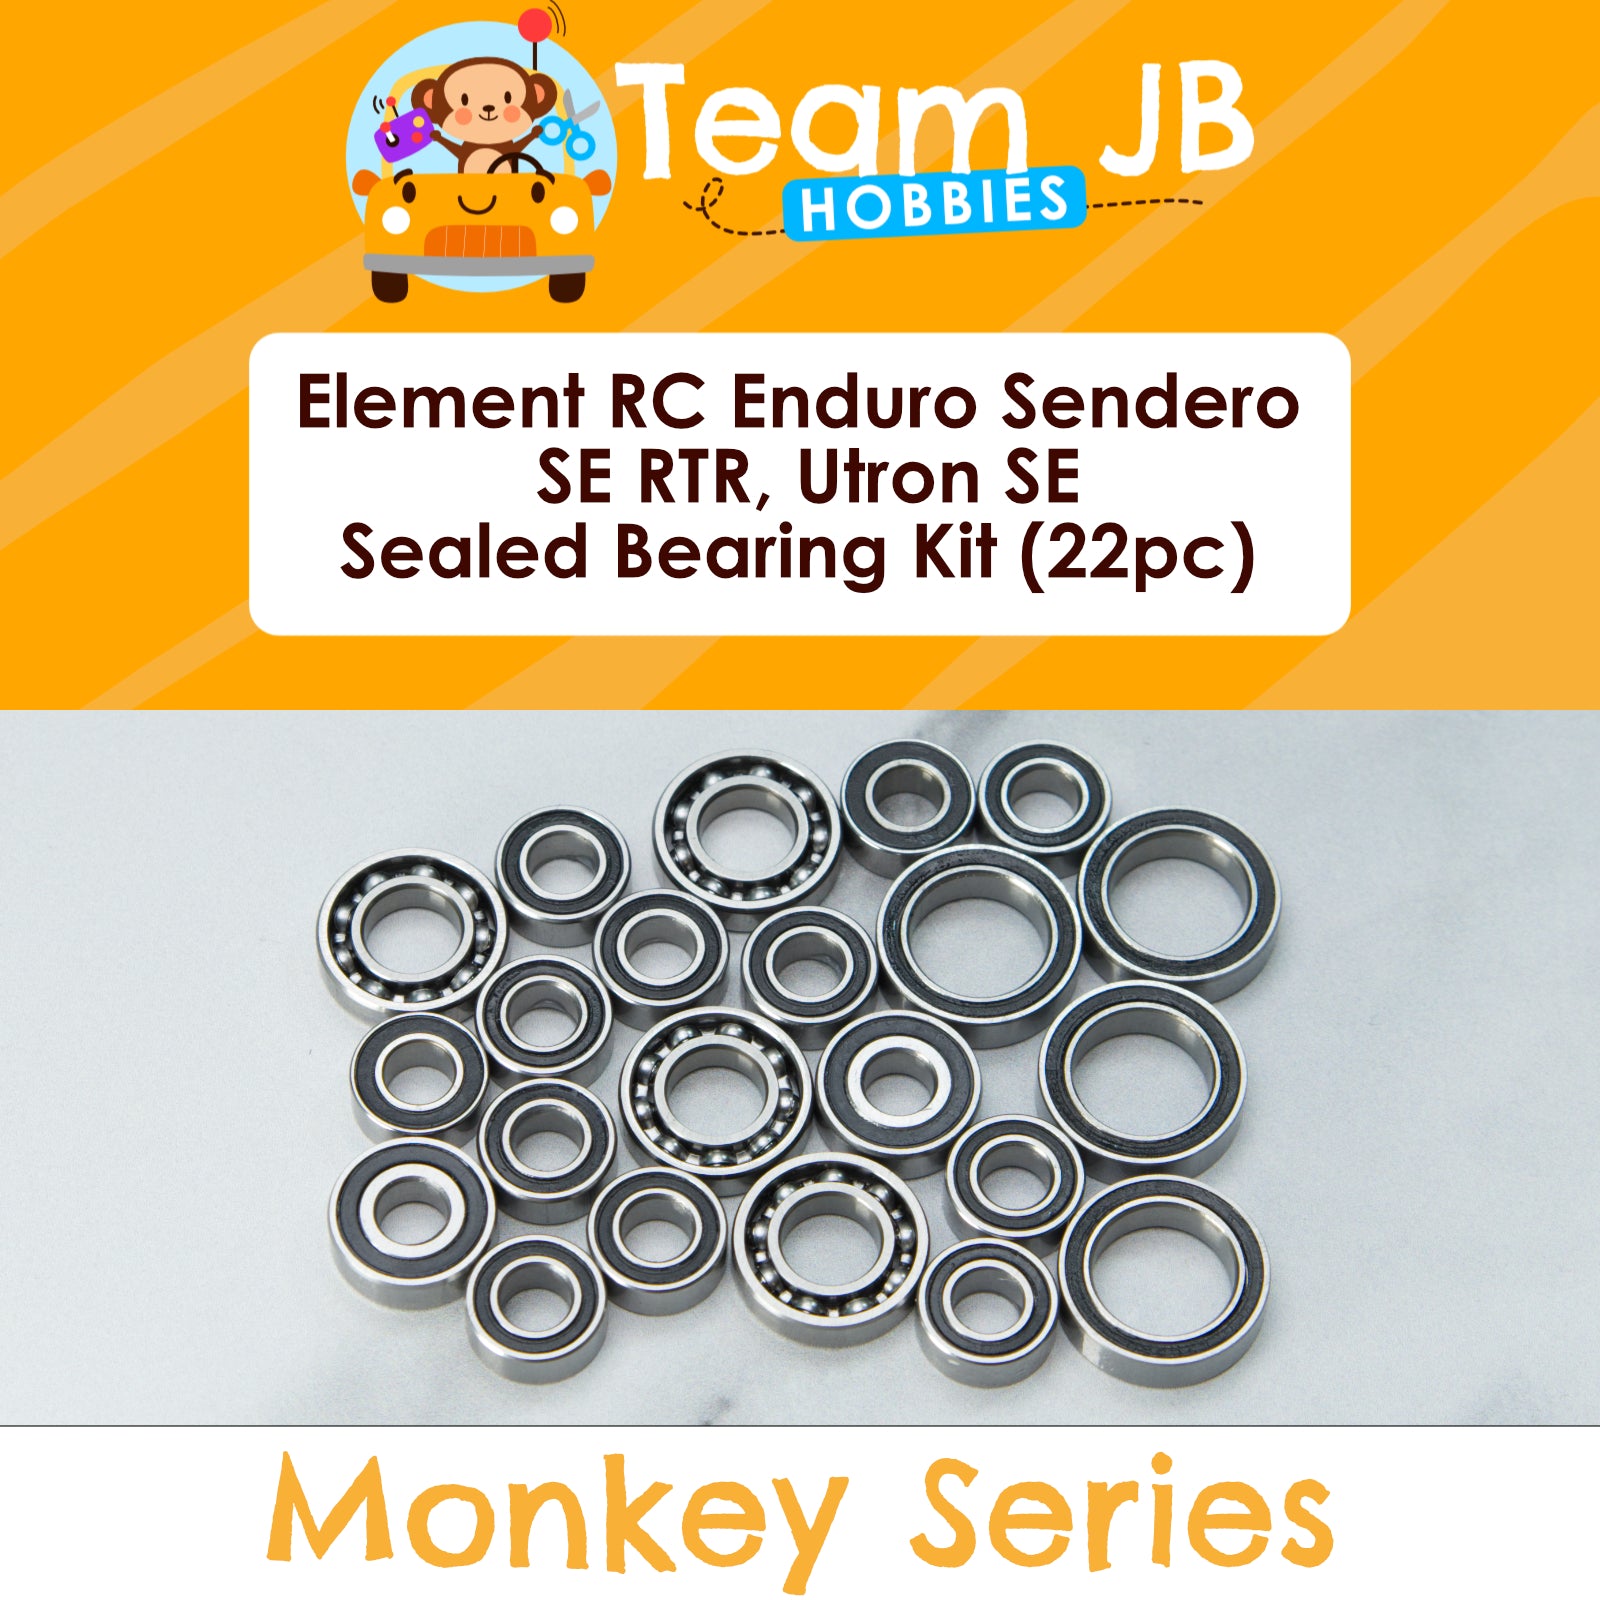 Element RC Enduro Sendero SE RTR, Utron SE - Sealed Bearing Kit